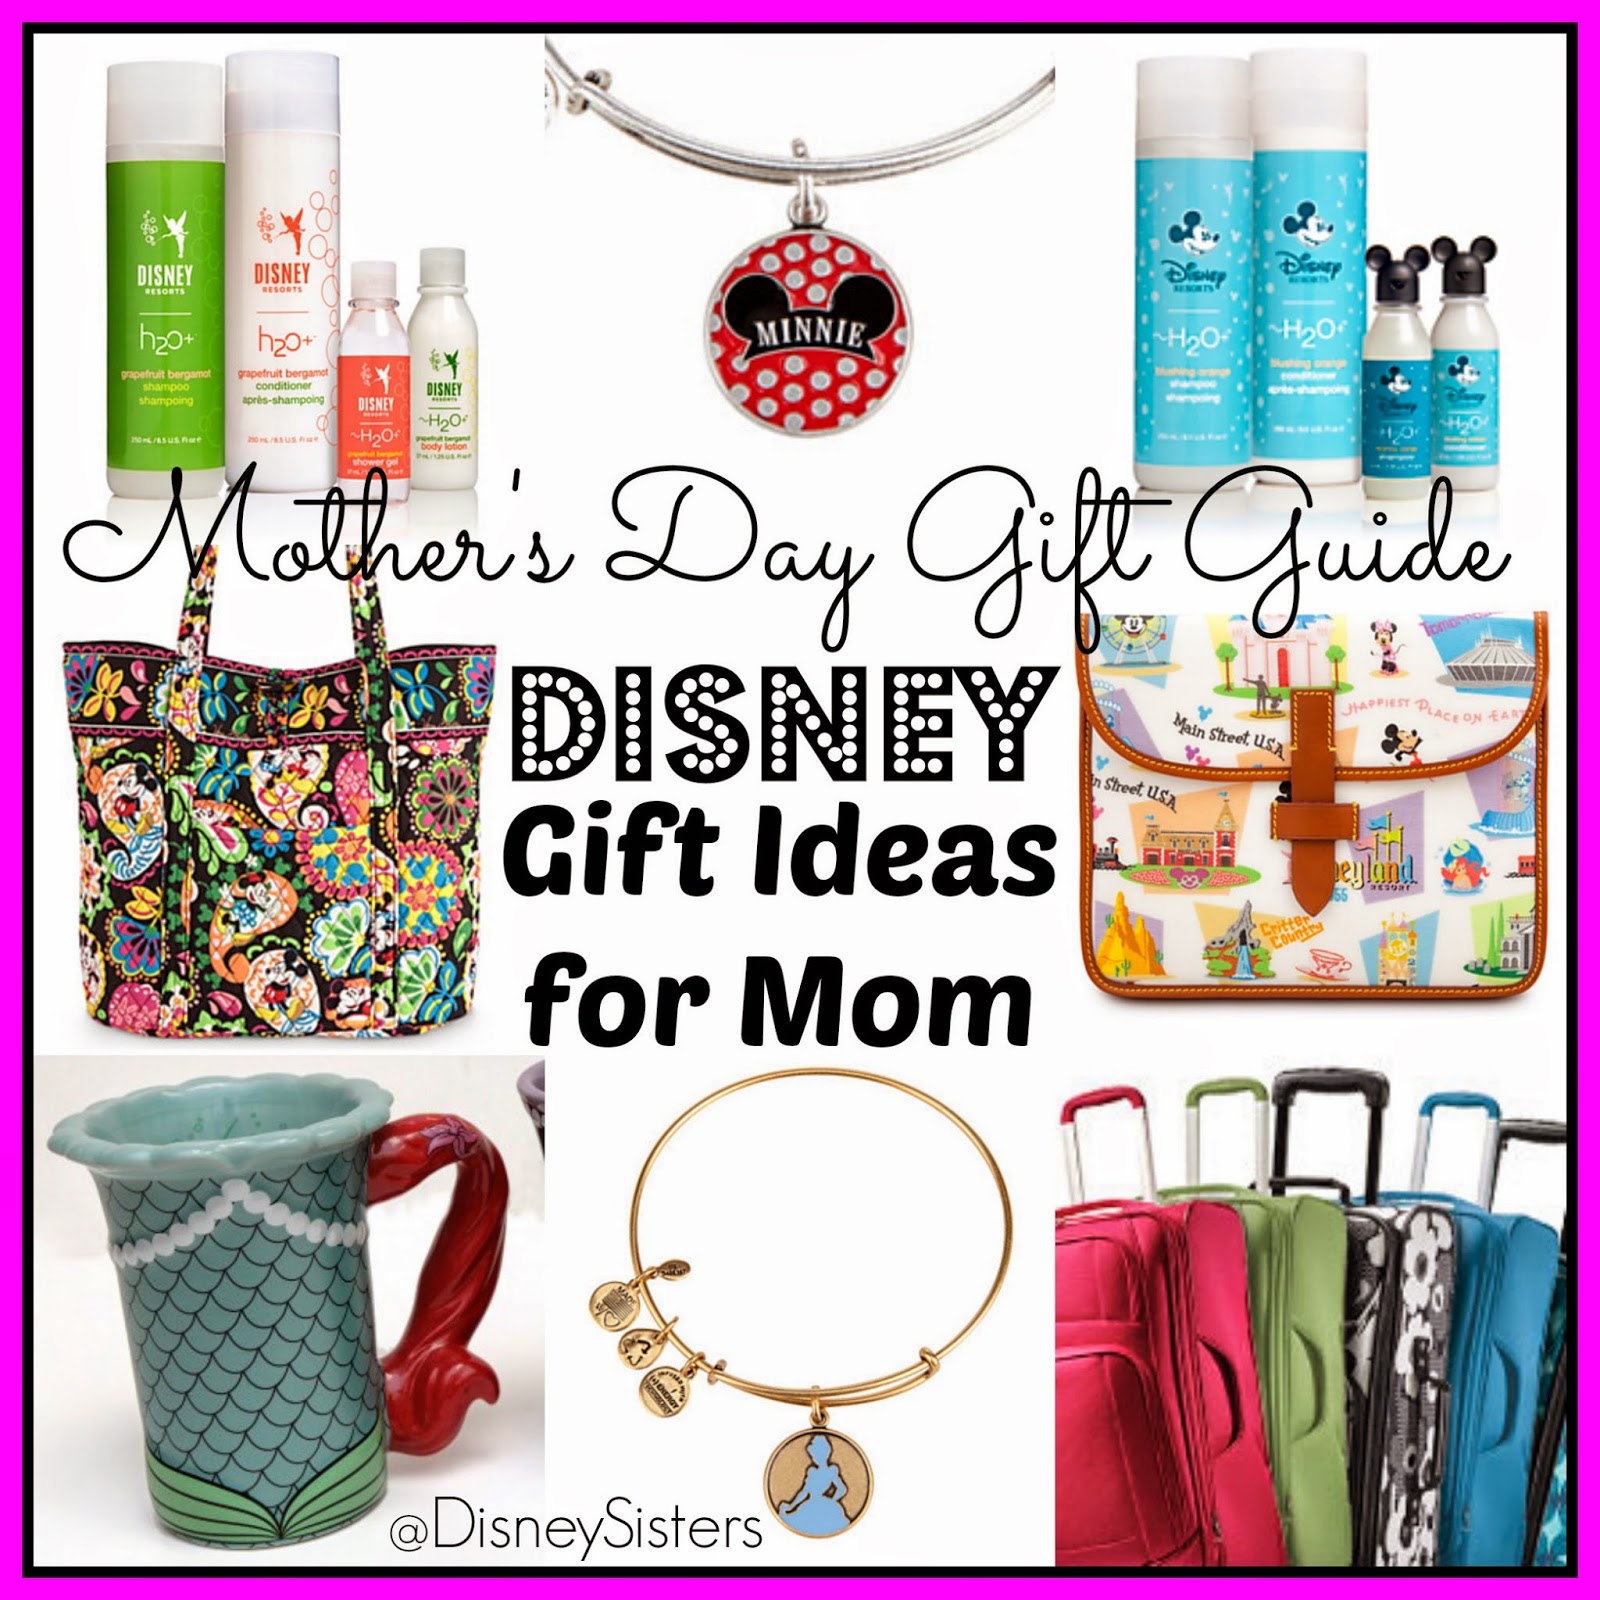 http://1.bp.blogspot.com/-gZCgq-PJFgs/U21KUz1ORDI/AAAAAAAAFkE/pxDR6_-ZSII/s1600/Disney+Gift+Ideas+For+Mom+on+Mother's+Day.jpg